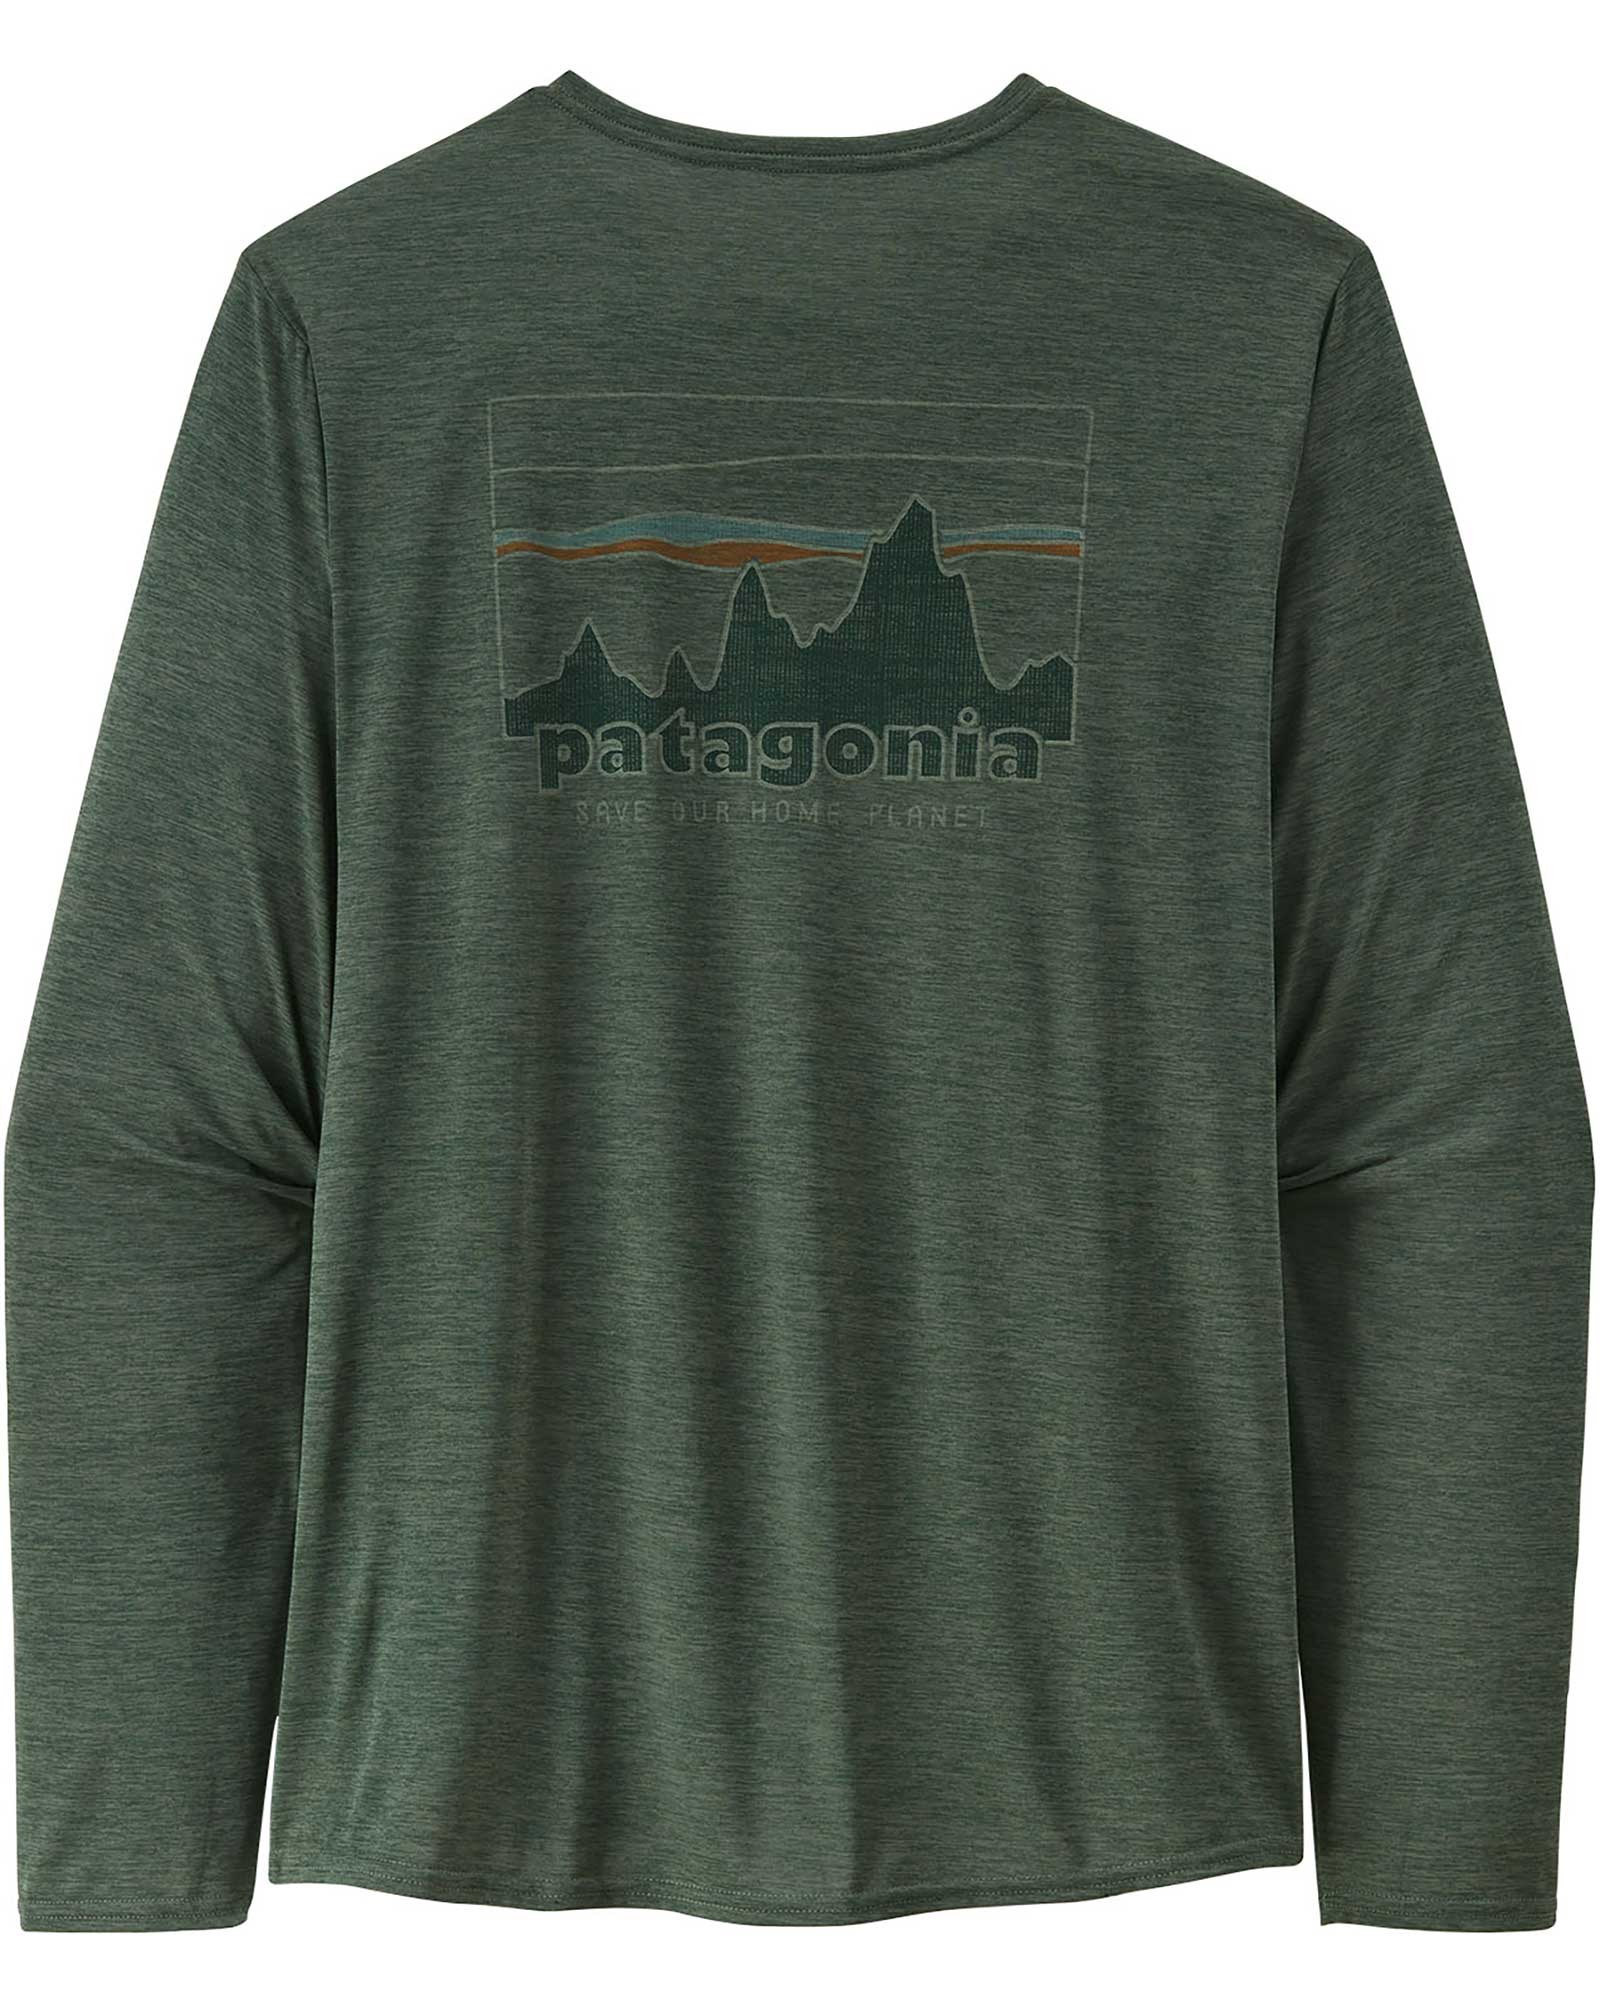 Patagonia Long Sleeve Cap Cool Daily Graphic Men’s T Shirt - Pinyon Green/73 Skyline XL